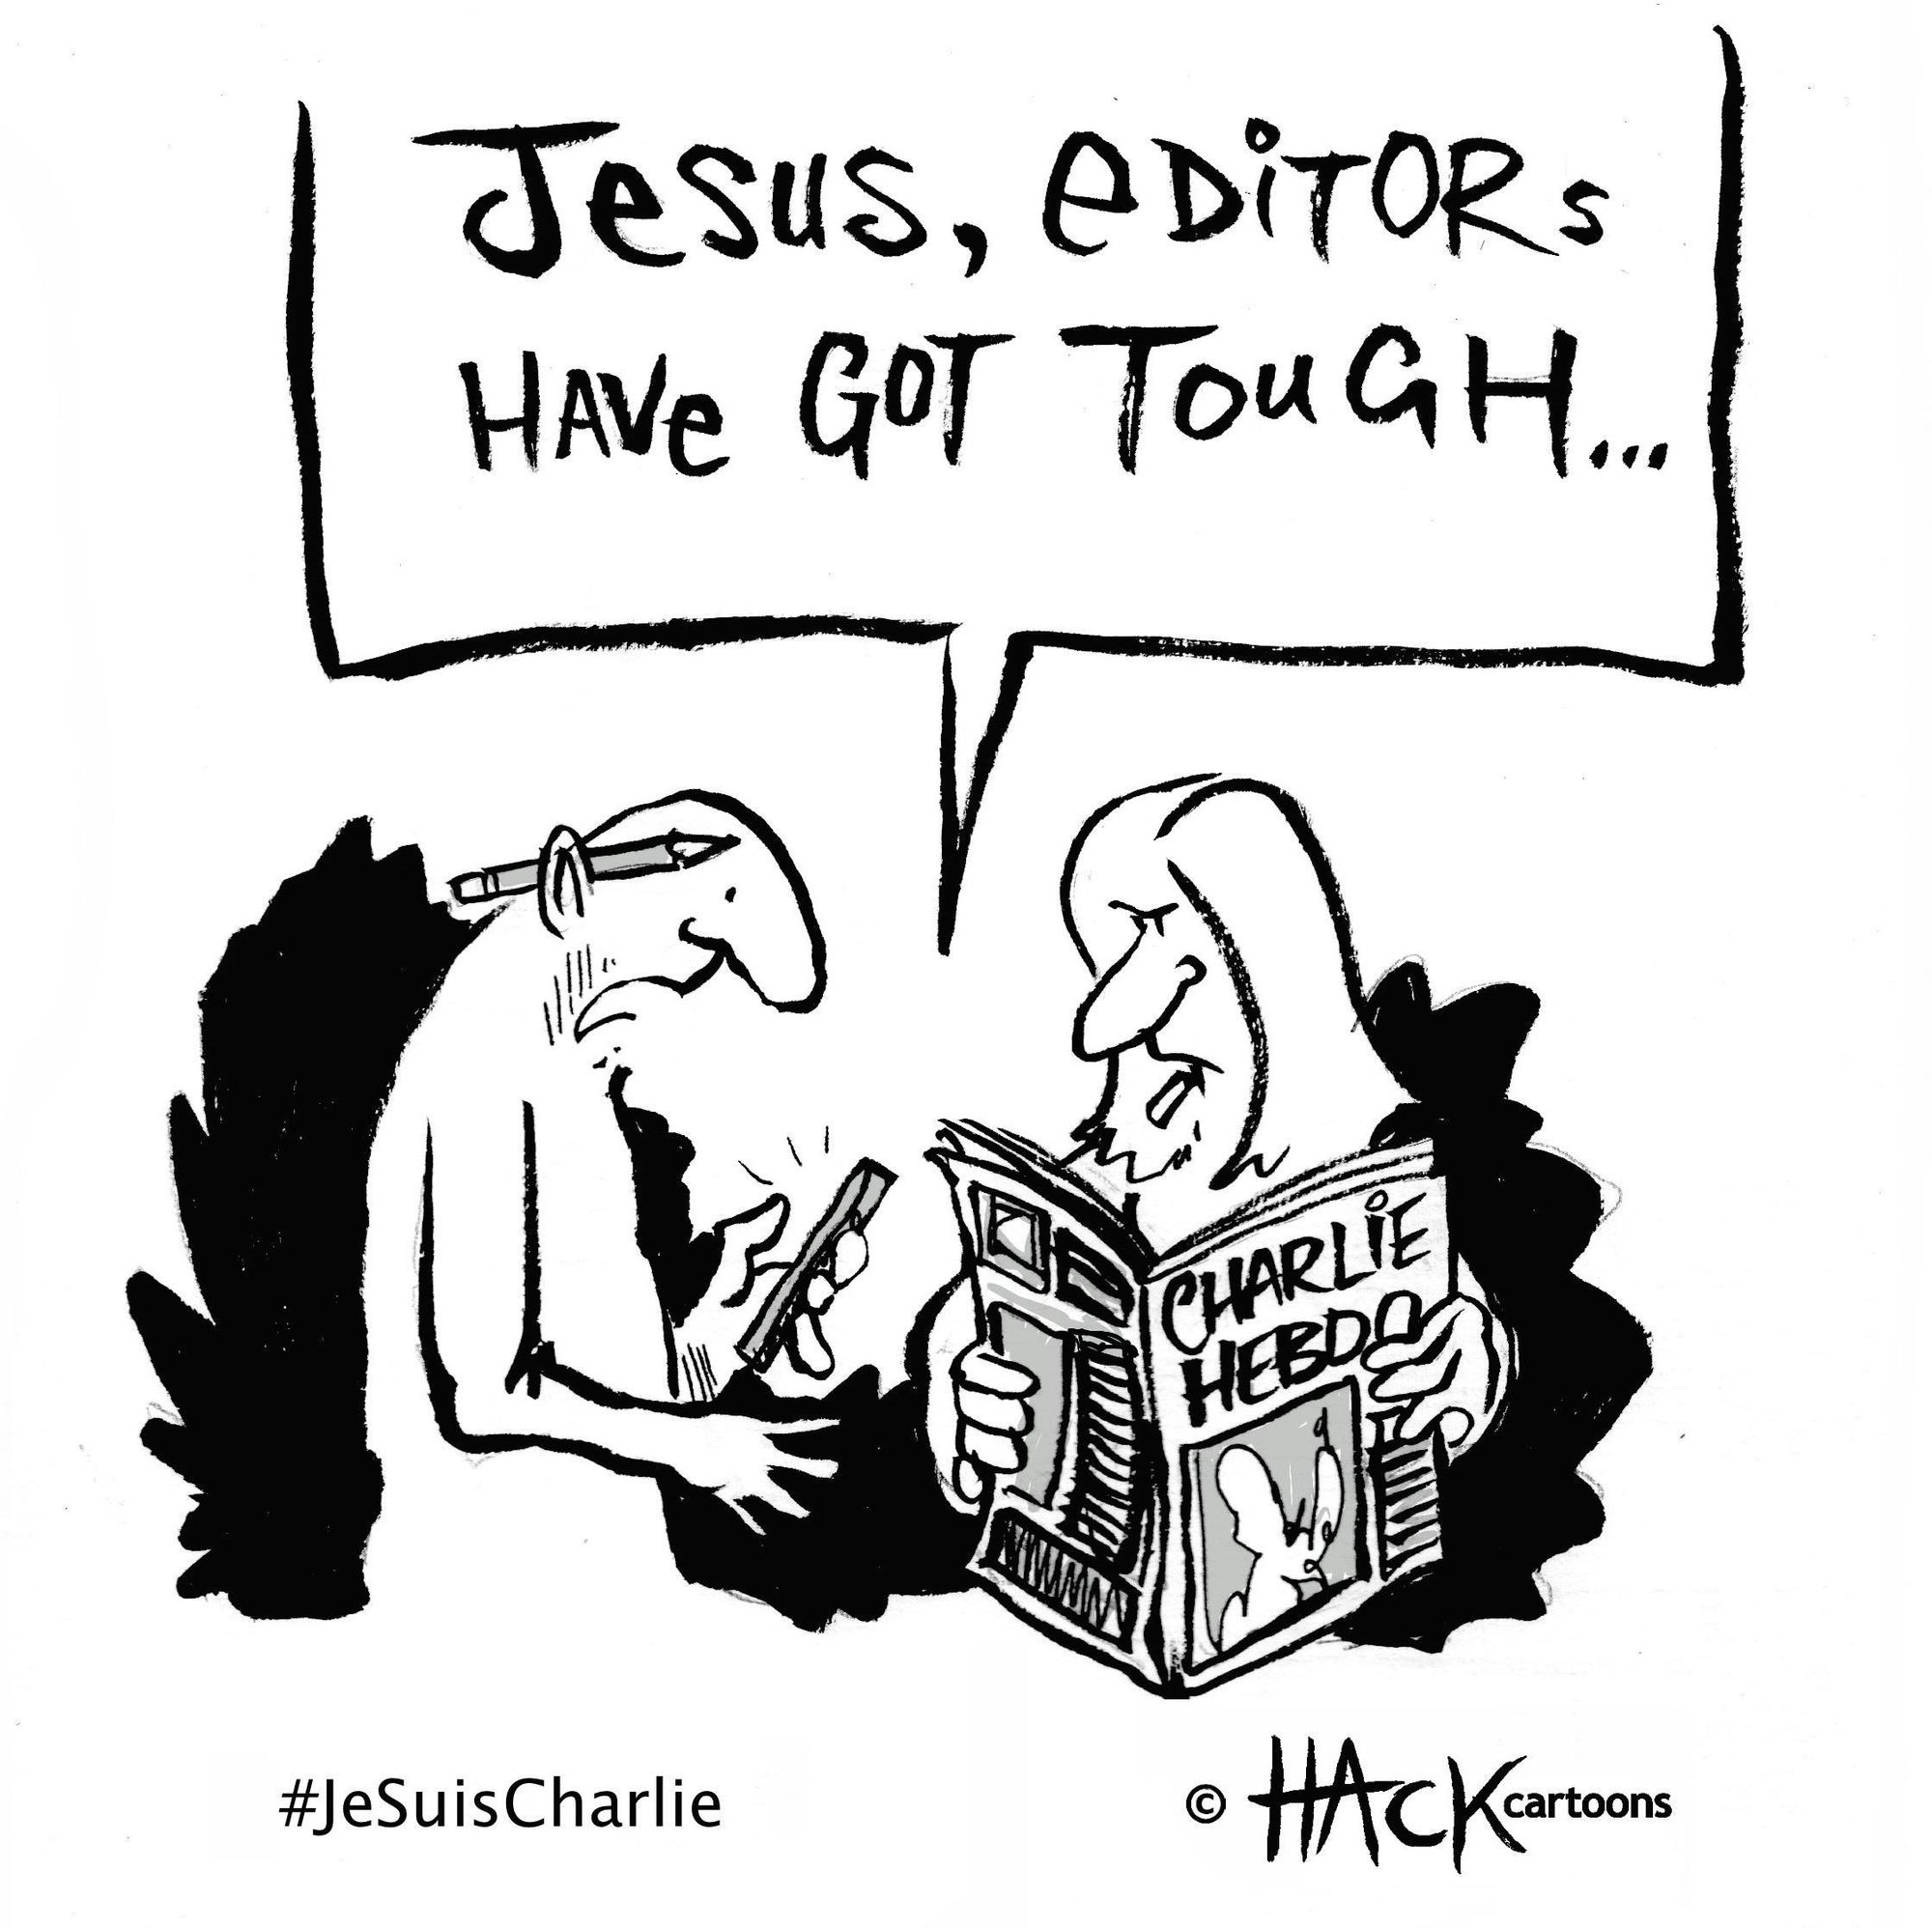 The Charlie Hebdo Backlash